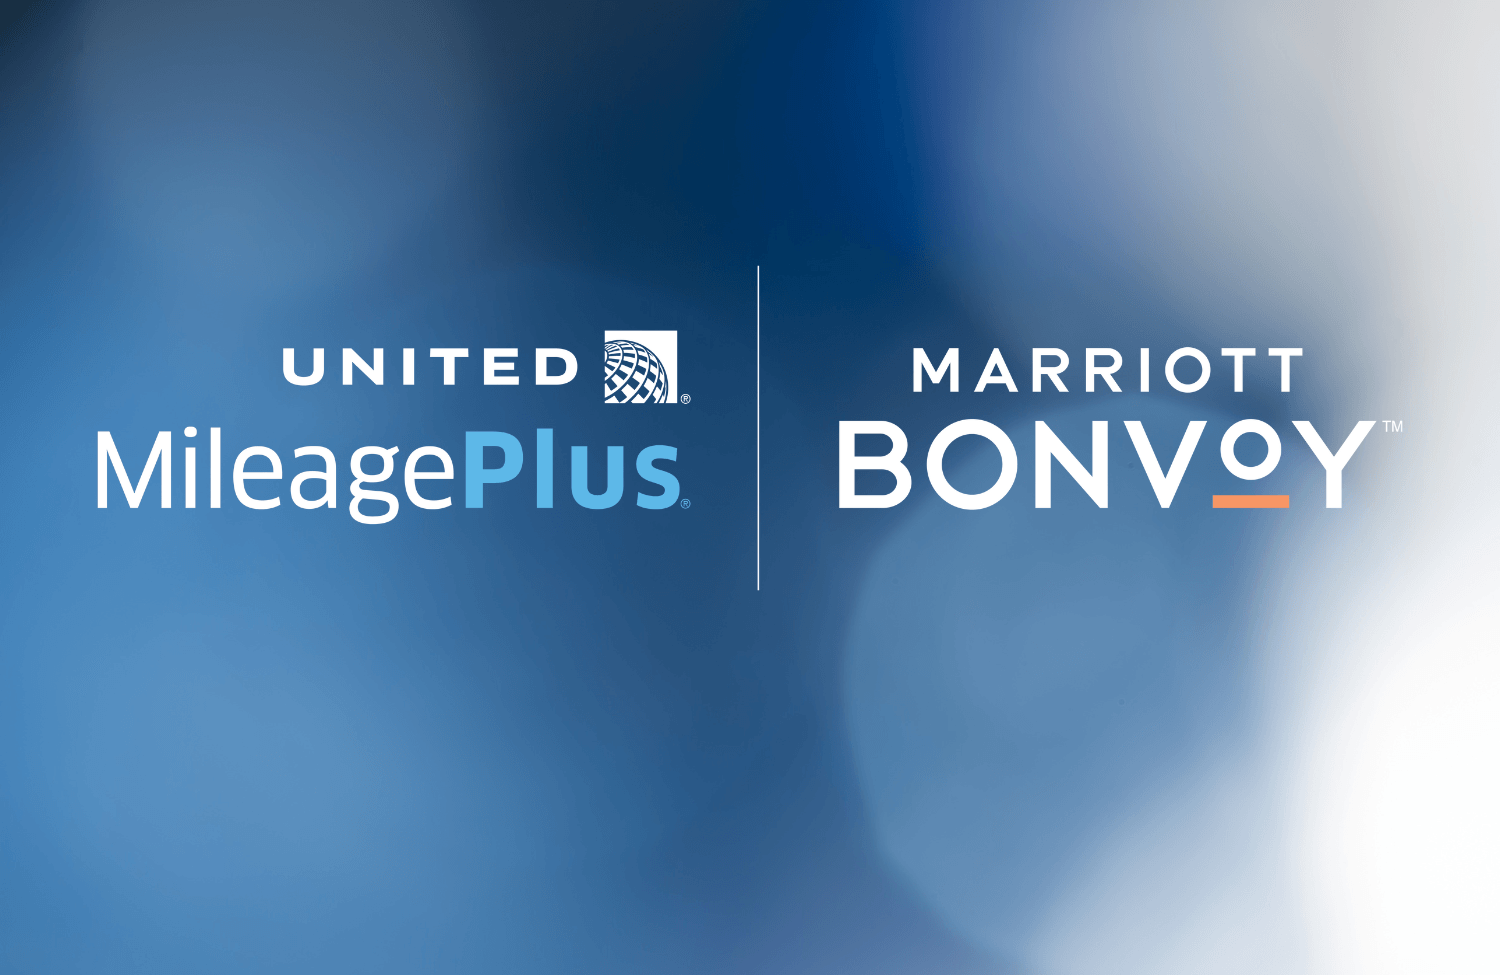 Marriott Bonvoy and United MileagePlus Partnership